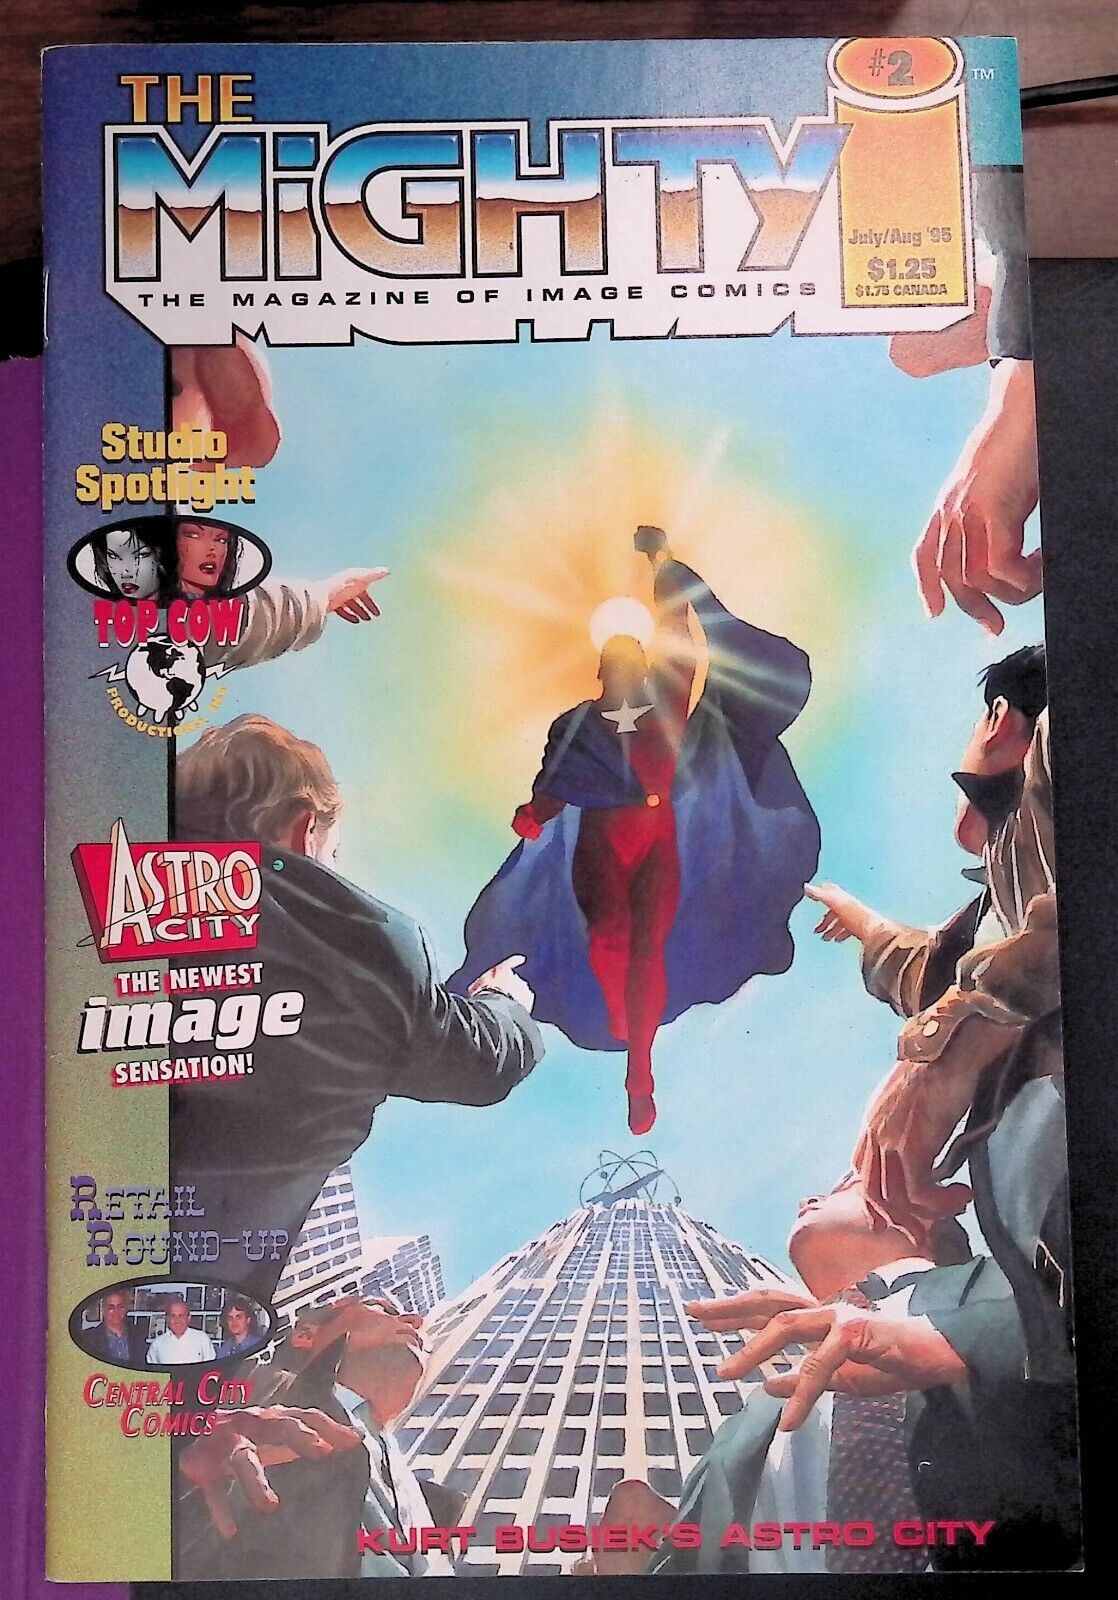 Image Comics -  The Mighty magazine of Image comics #2